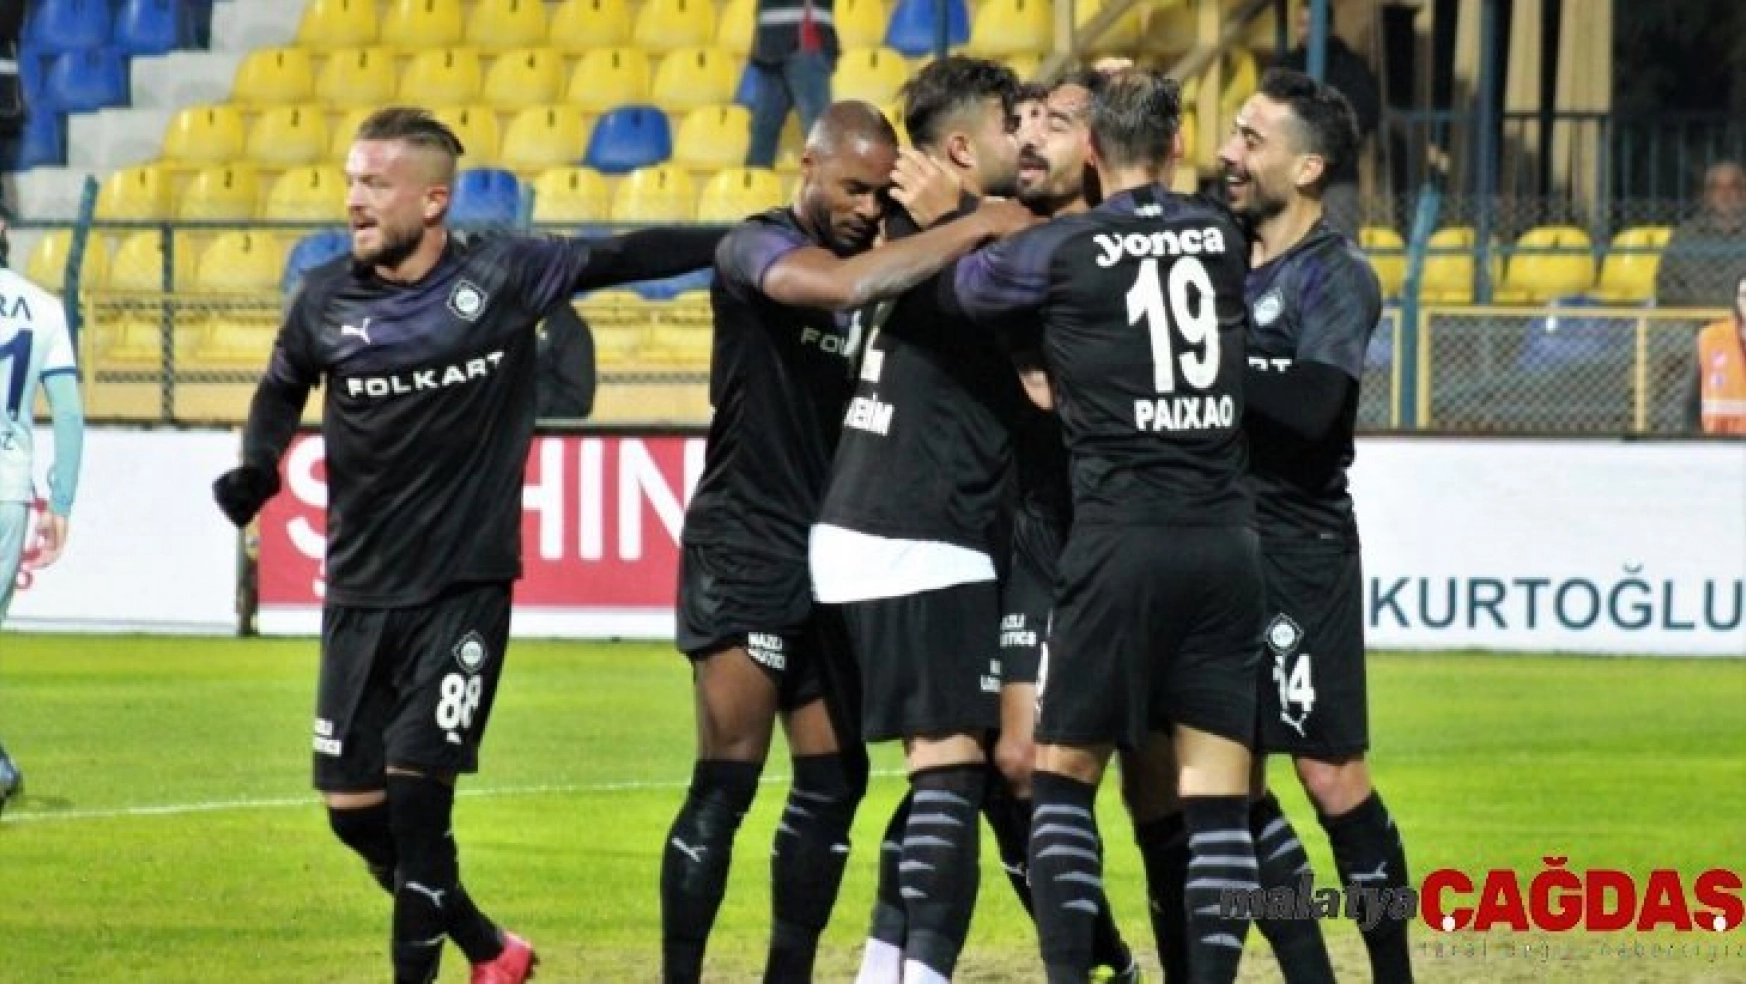 TFF 1. Lig: Altay: 1 - Adana Demirspor: 0